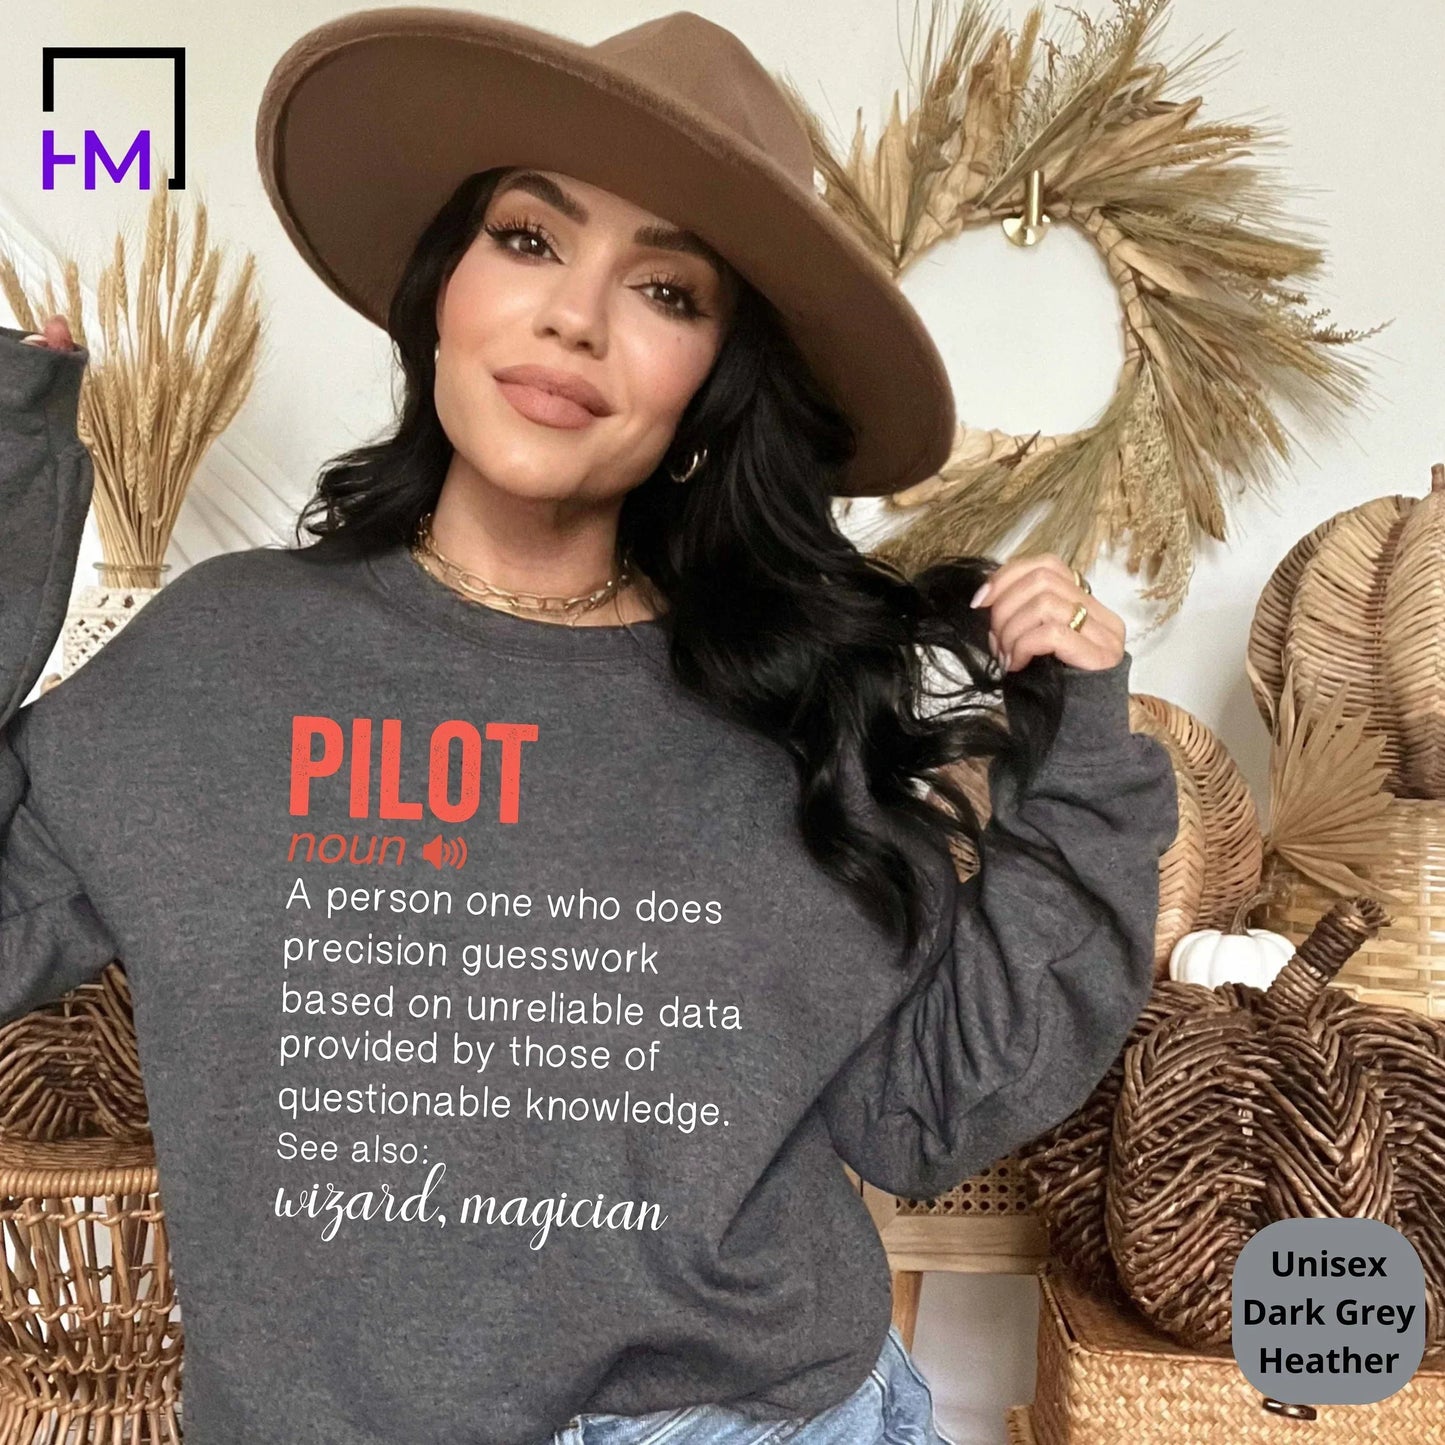 Funny Pilot Shirt, Airplane Mode Shirt, Aviation Graduate Student, Pilot Gift for Traveler, Adventurer Gift, Frequent Flyer Vacation Tee HMDesignStudioUS